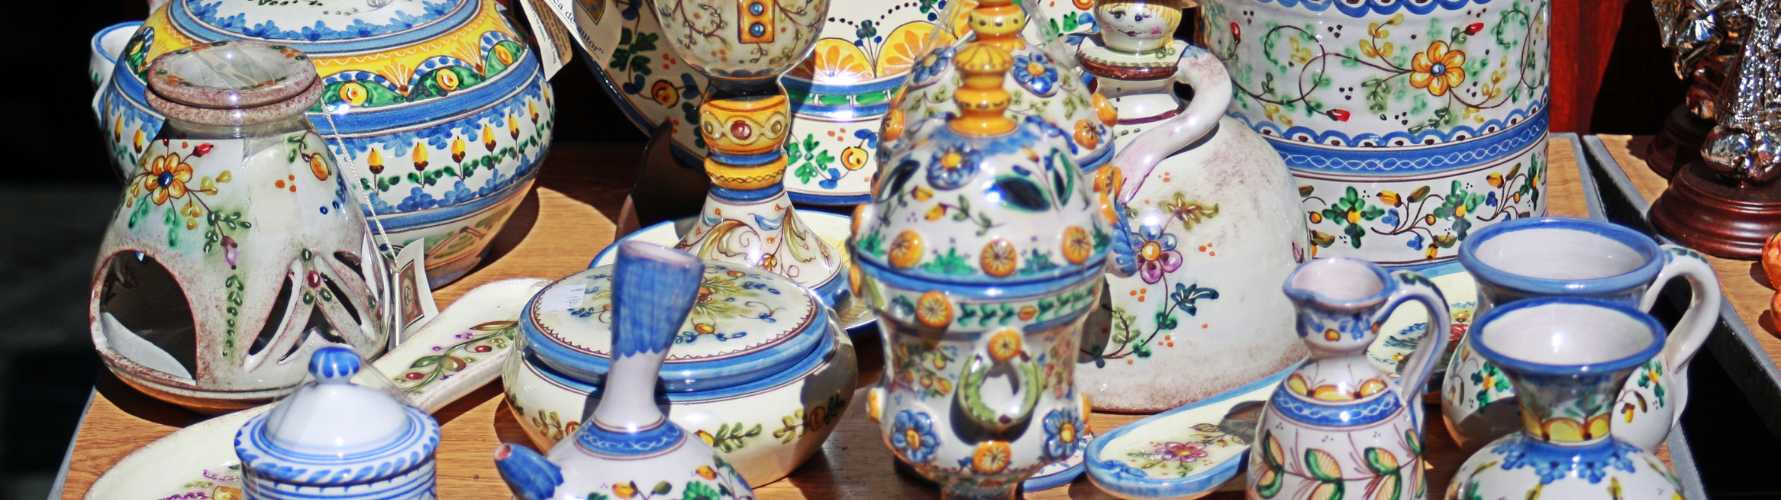 valencianische keramik